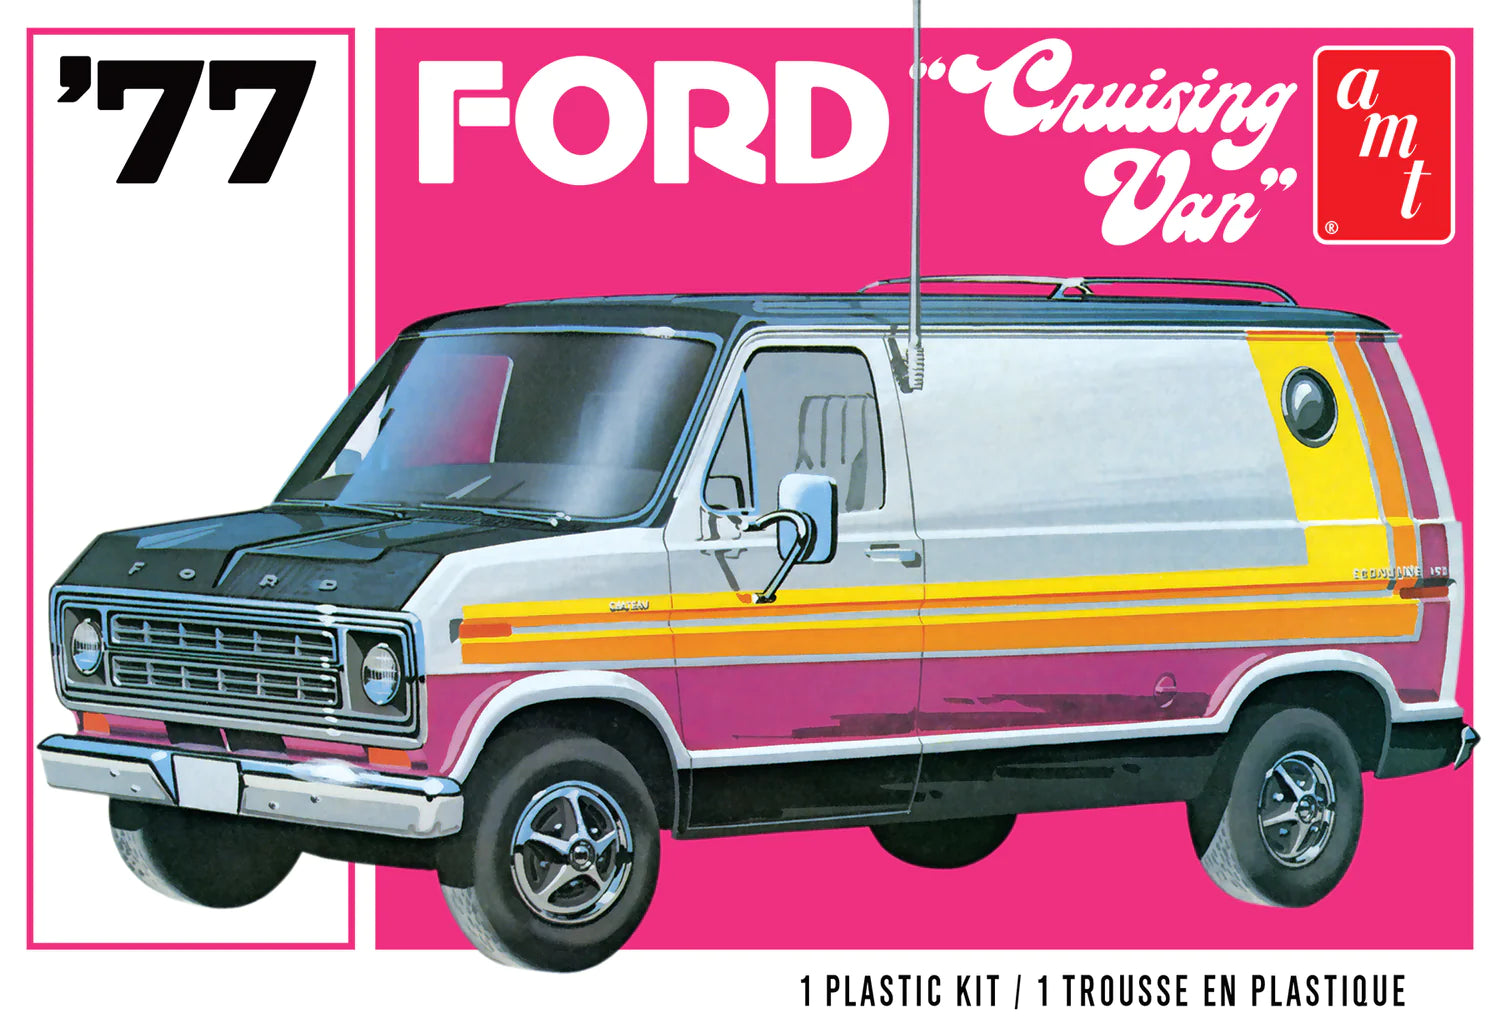 AMT1108M - 1:25 1977 Ford Cruising Van 2T